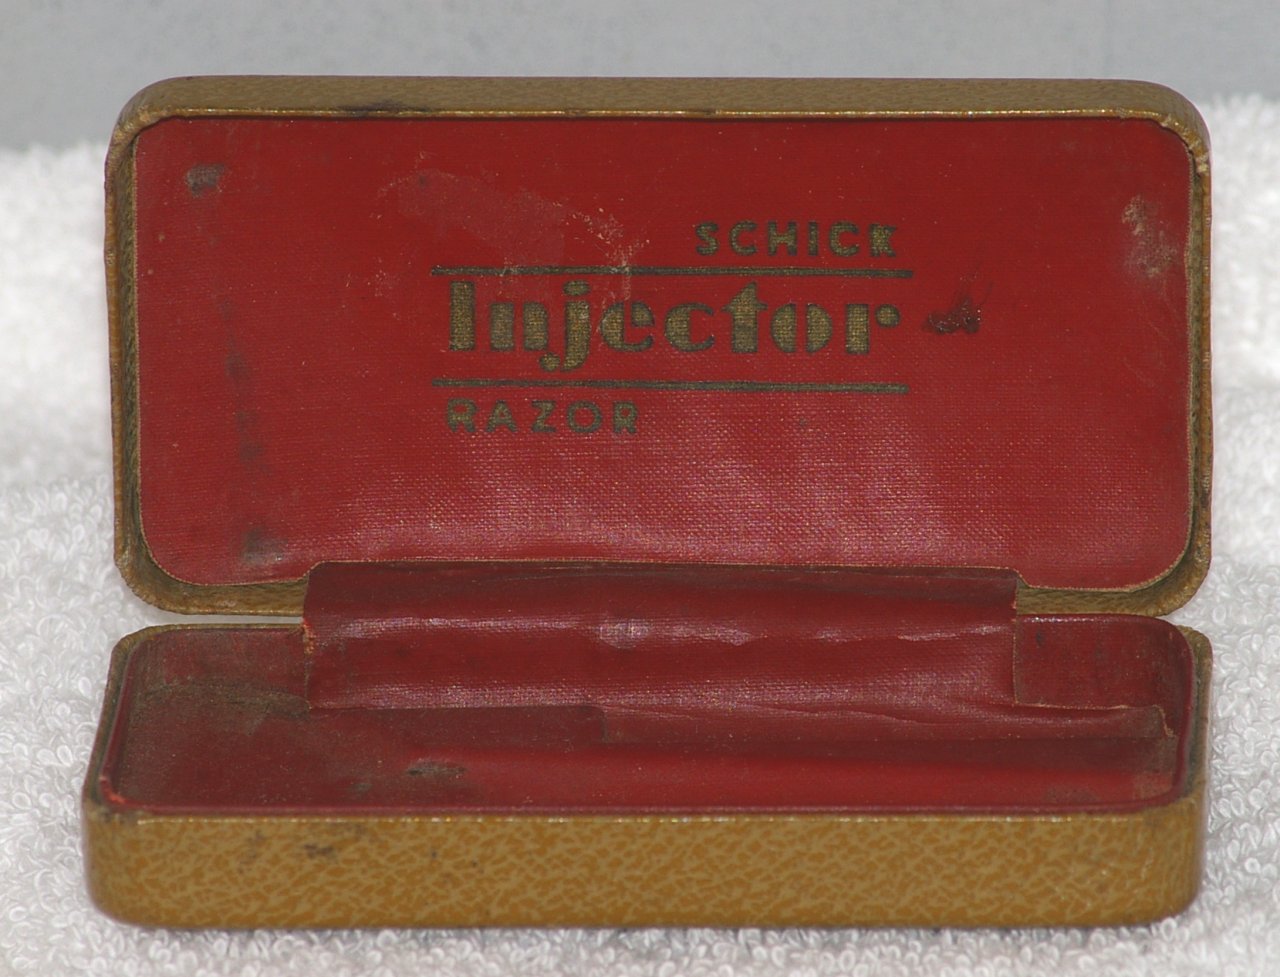 Schick Injector Razor, Type E1 from 1935